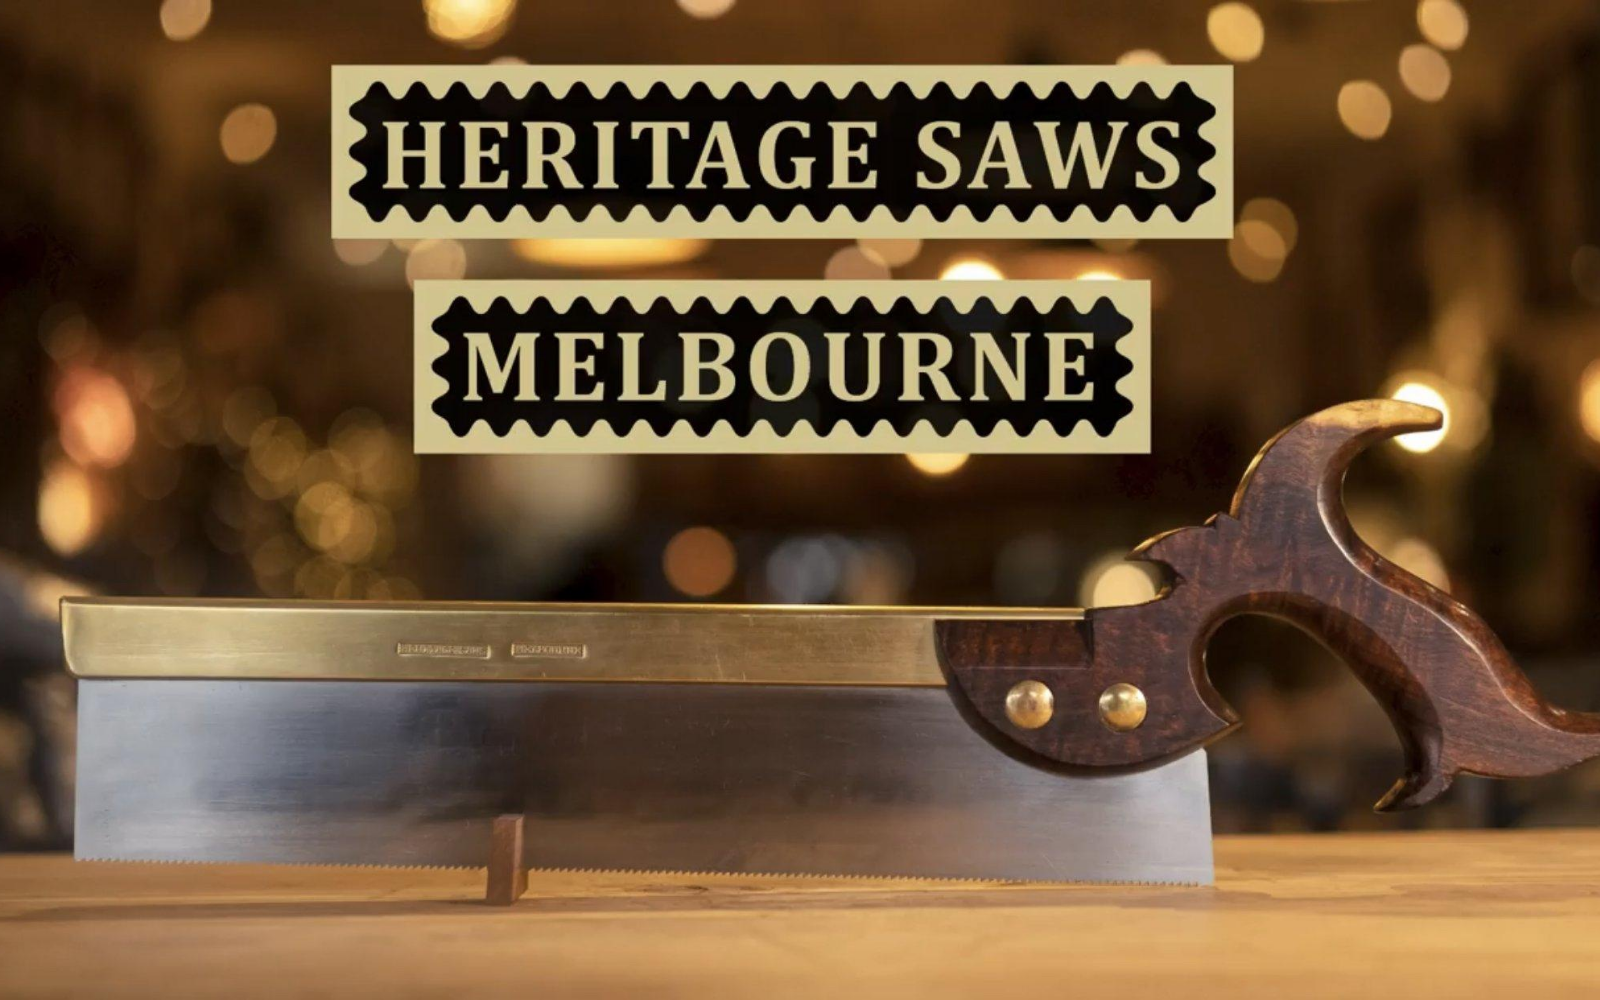 Load video: Heritage Saws Melbourne Australia saw making saw makers handtool tool maker saws backsaws